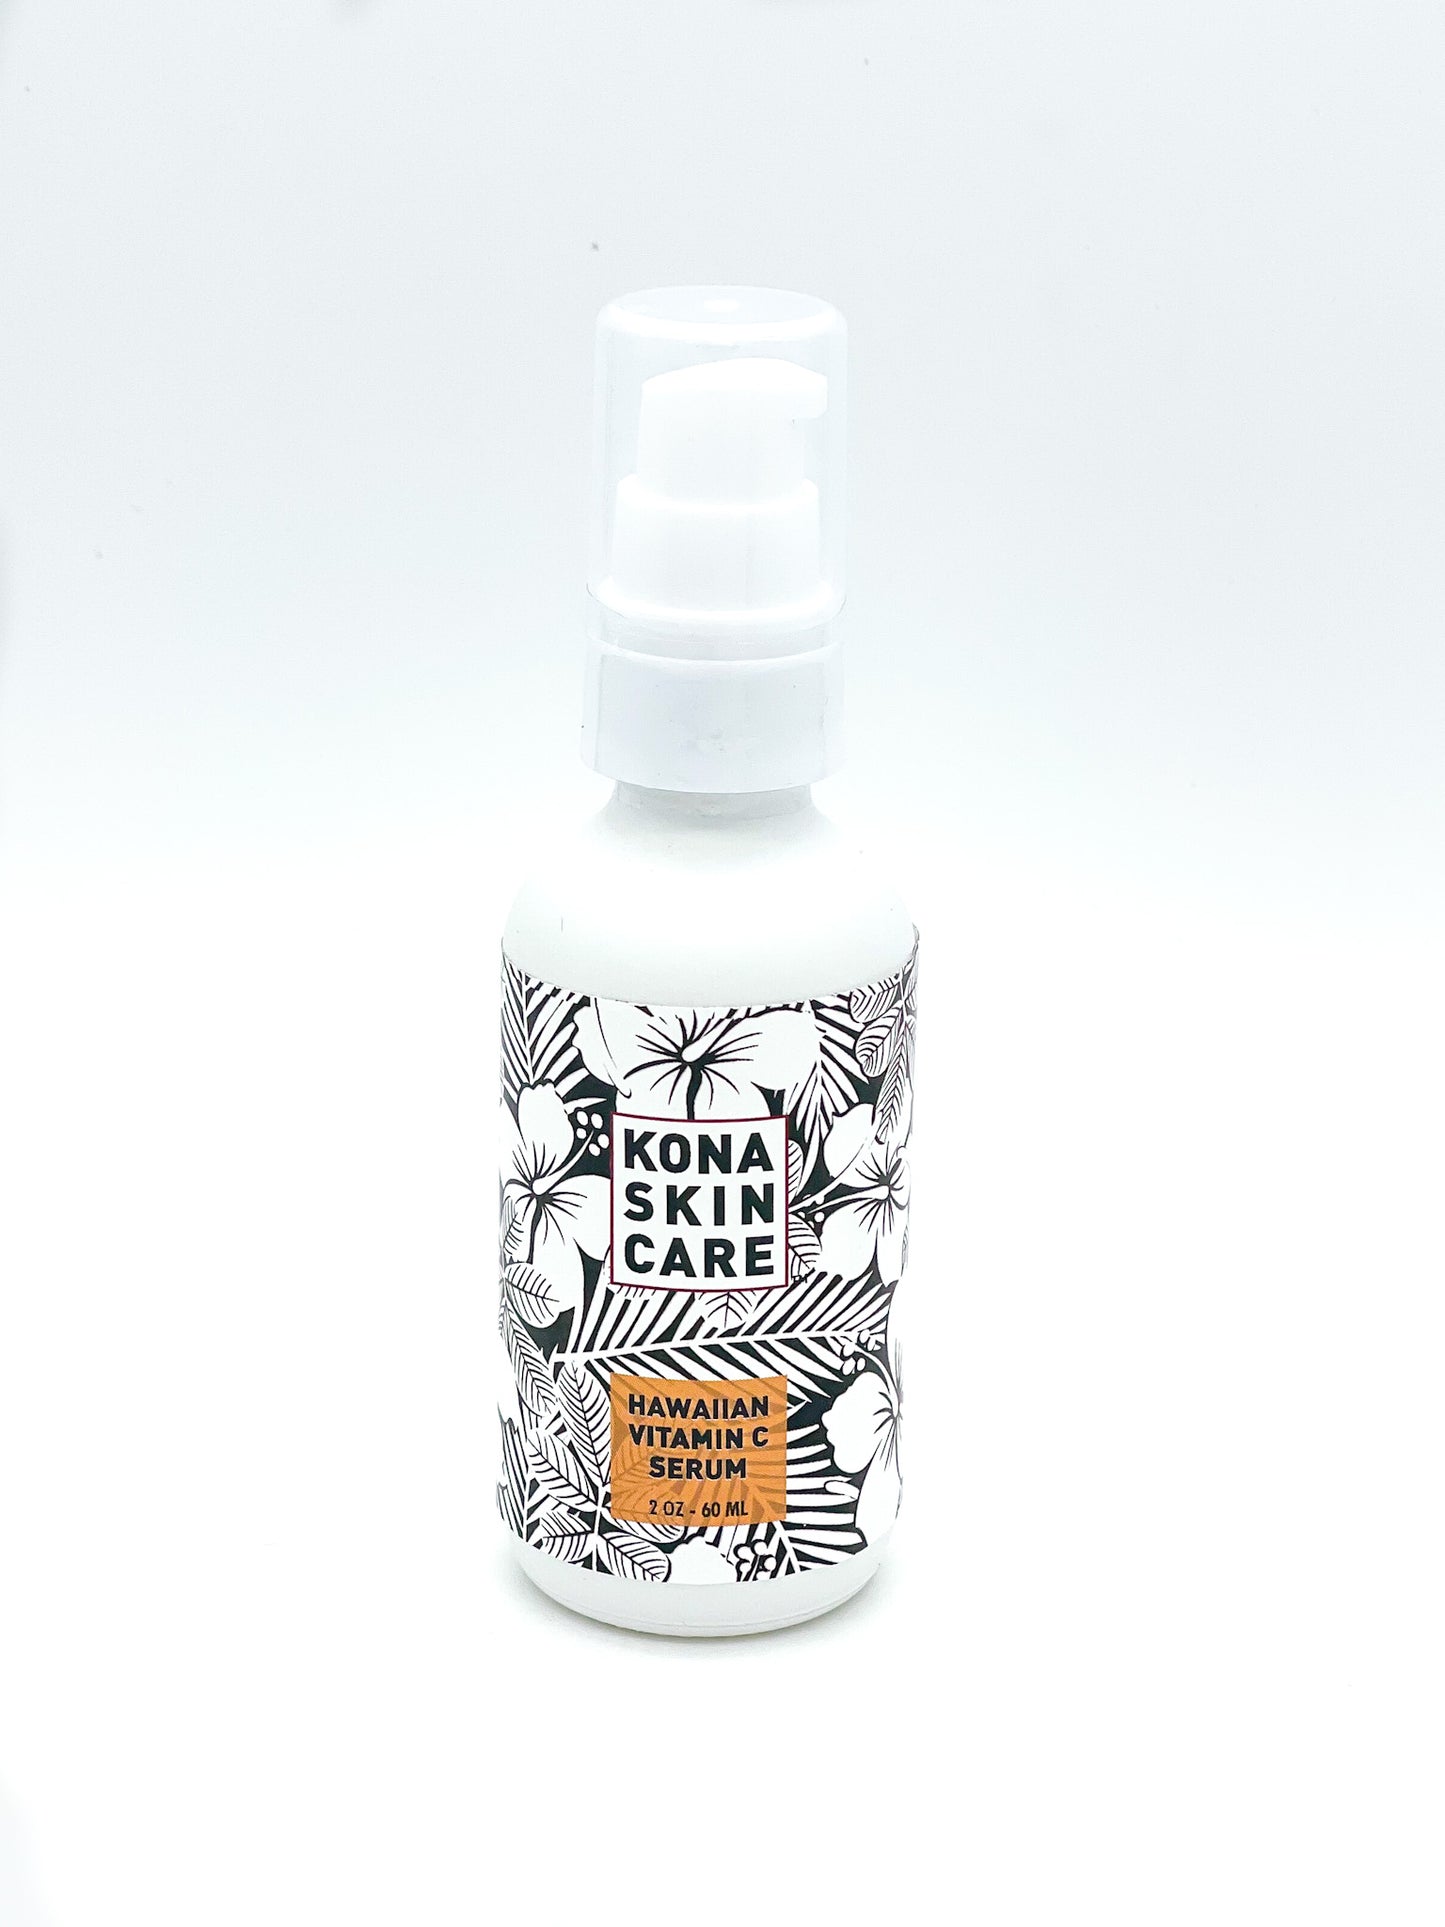 Kona Skincare Hawaiian Vitamin C Serum 2 oz bottle